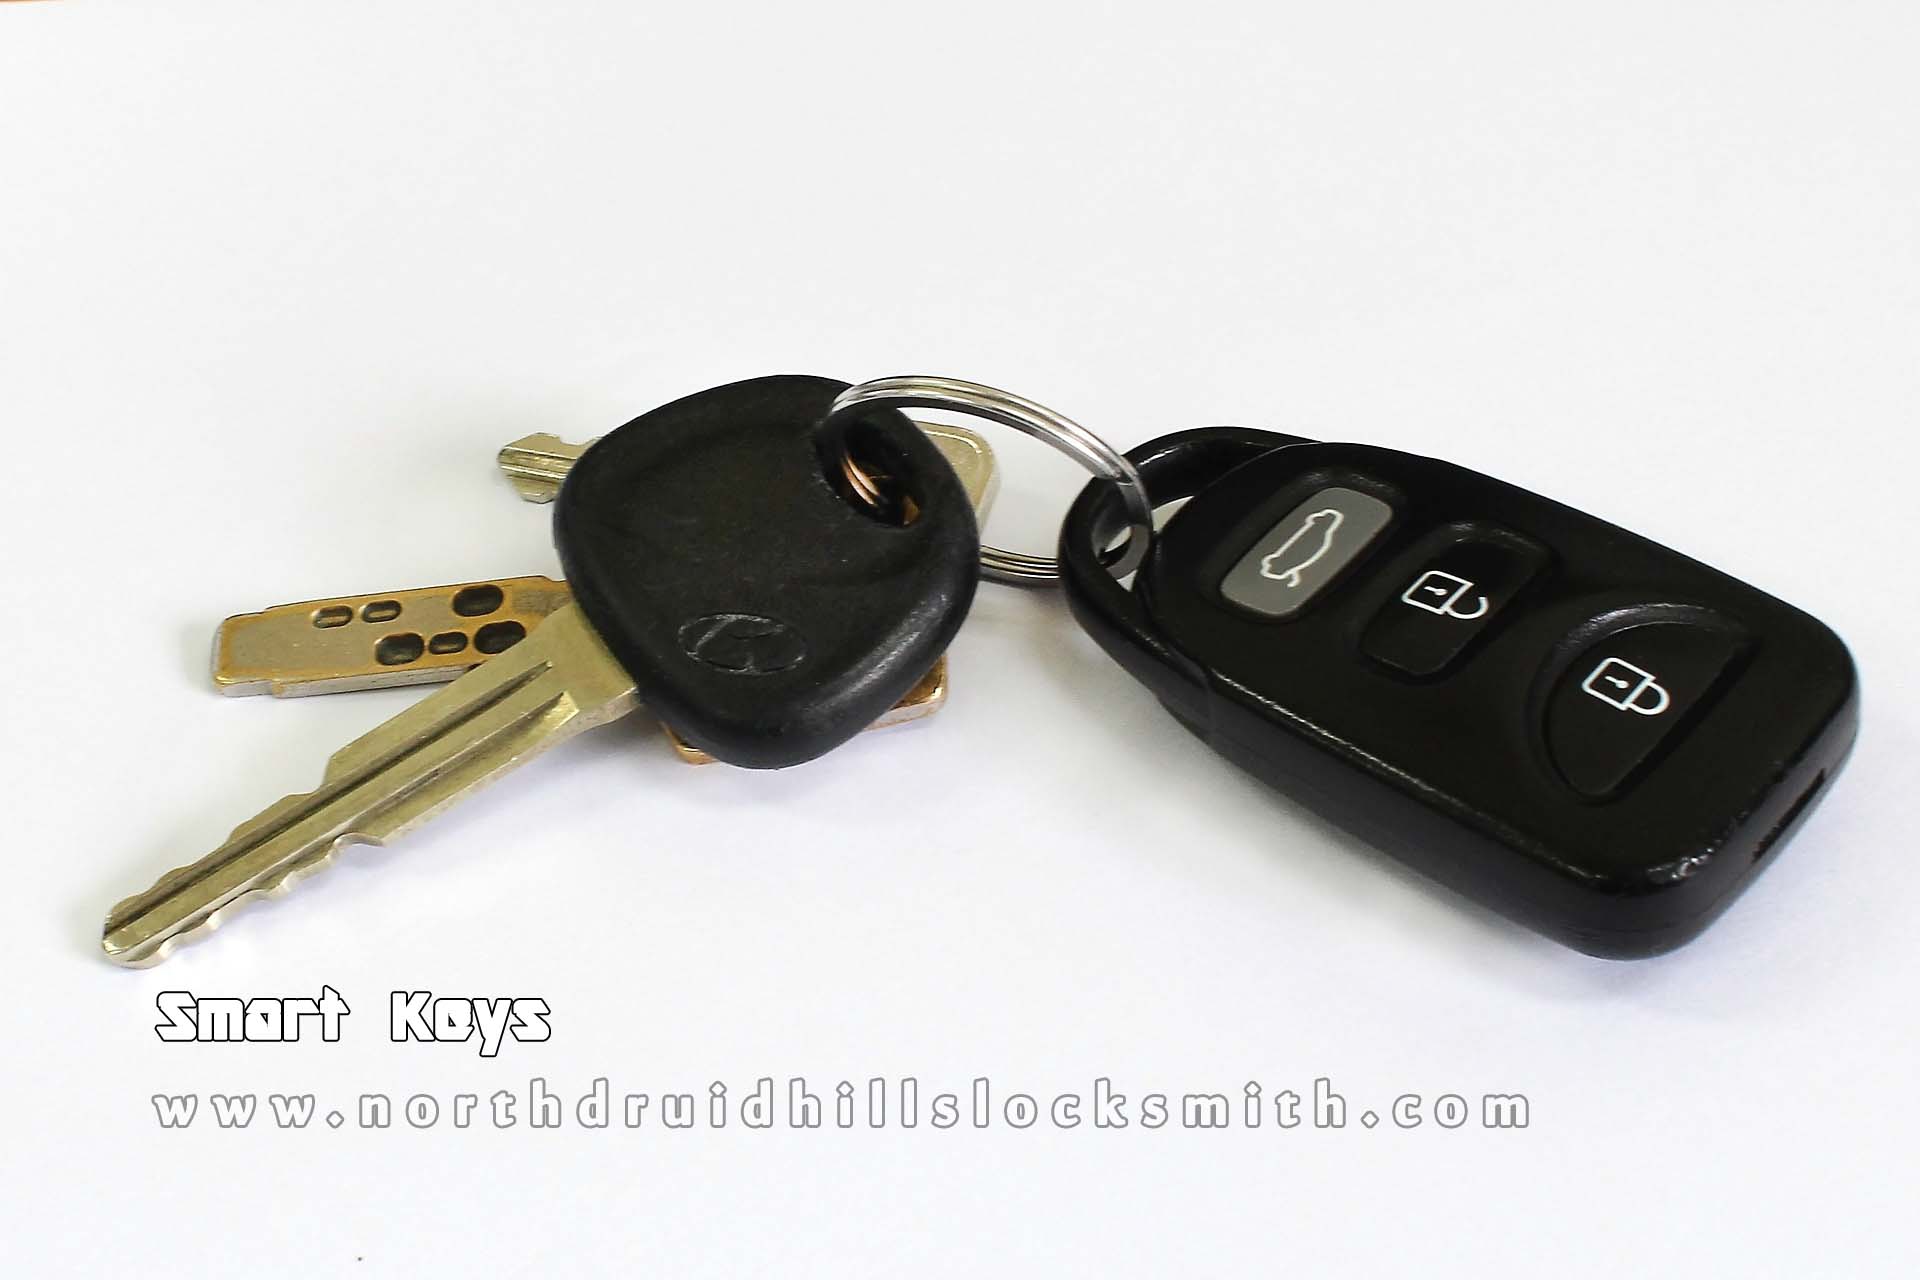 North-Druid-Hills-locksmith-smart-keys